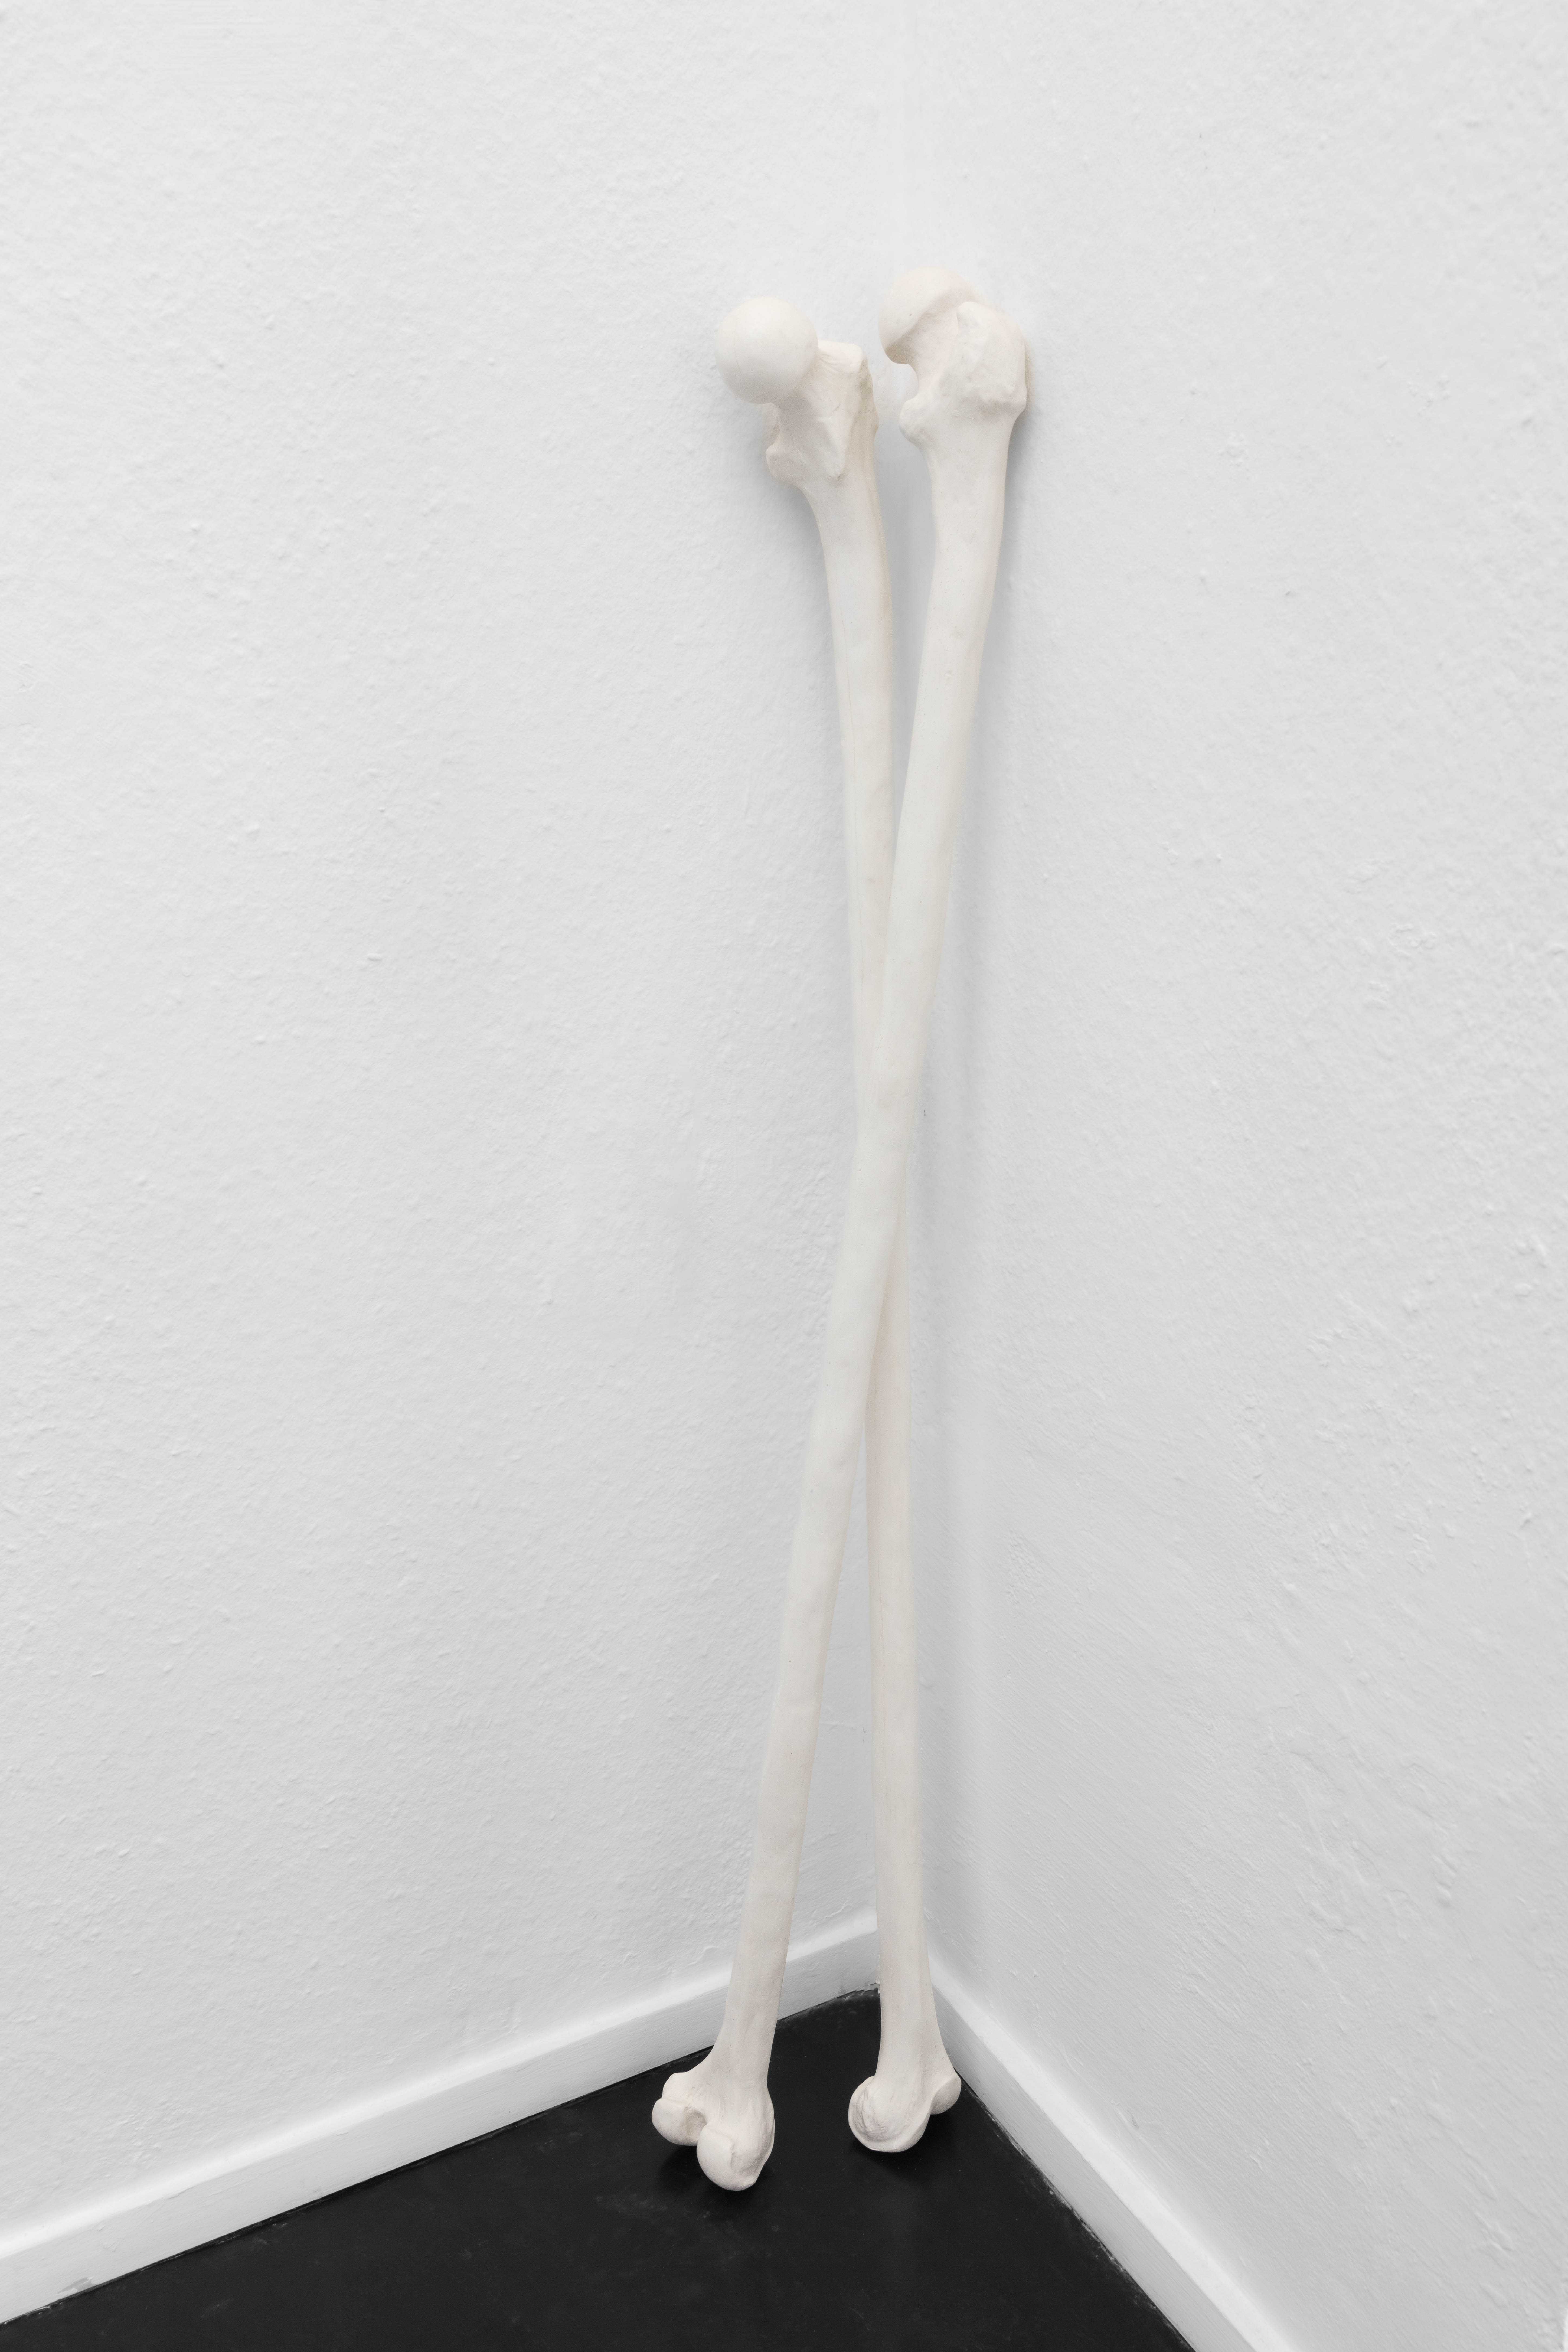 Gabriele Rotheman, Knochenkrücken, 2021, Acrystal, wax, h=108cm